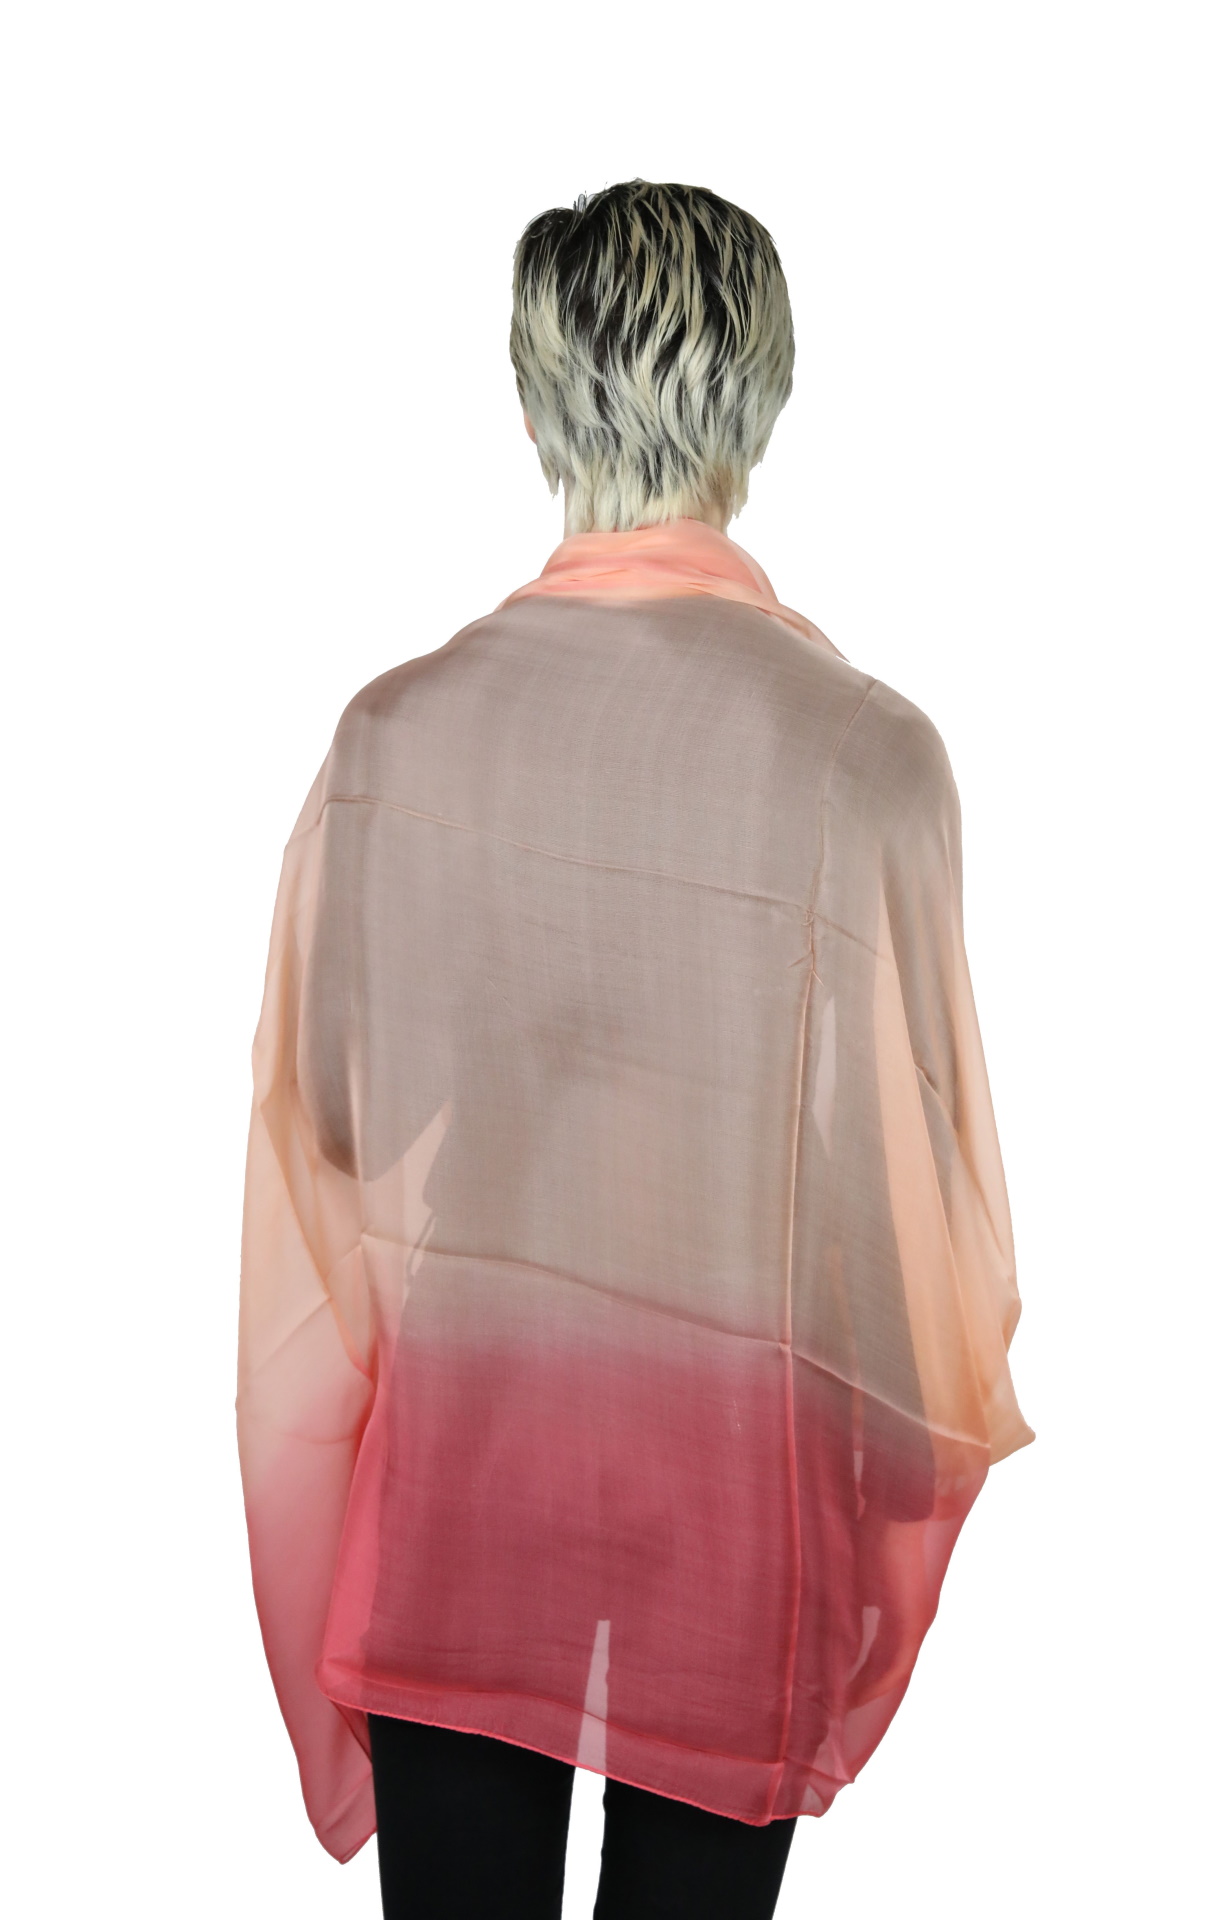 SILKCT21 FOULARD SCIARPA DONNA 100 SETA 110CMX180CM 2 1stAmerican foulard/sciarpa 100% seta da donna 110cmx180cm